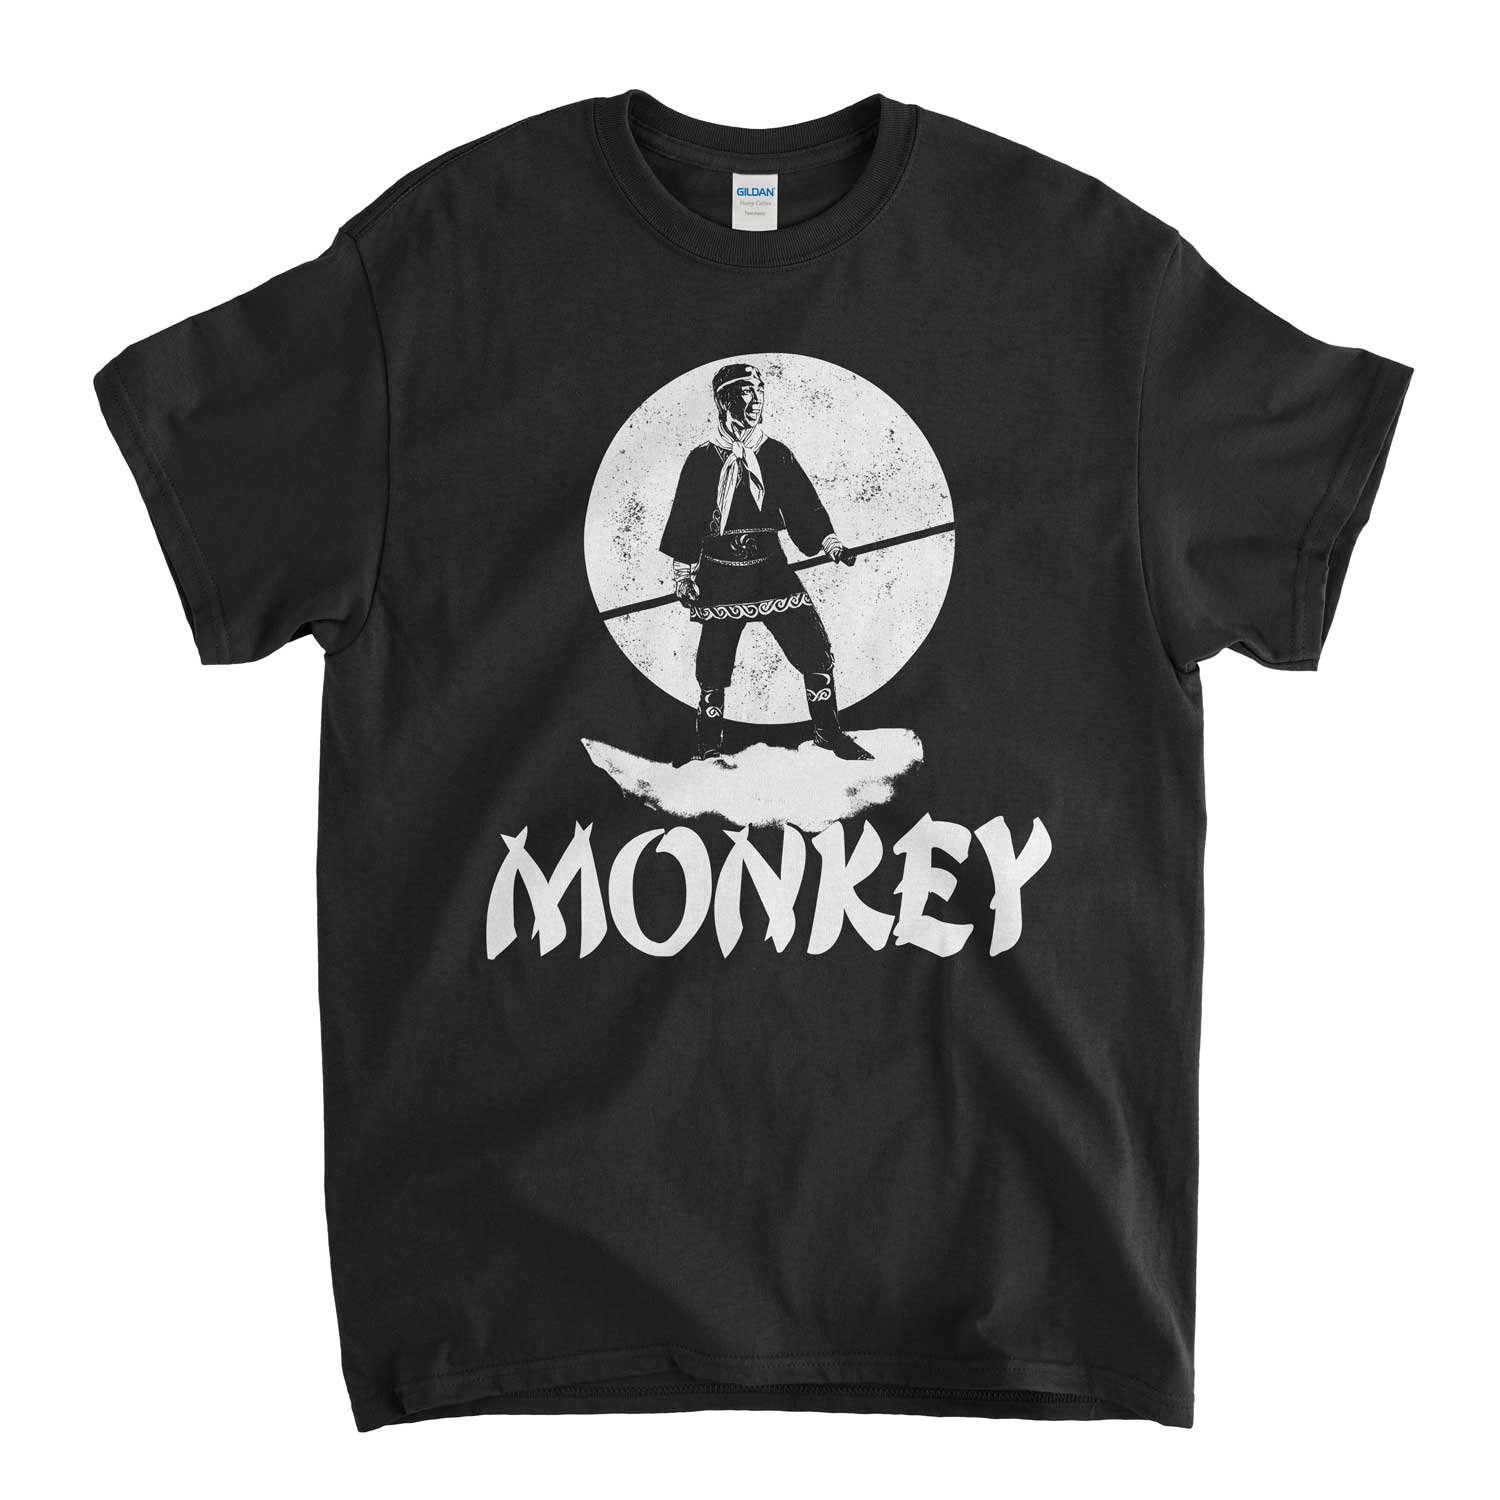 Monkey T Shirt - Cult Japanese TV Show Tribute Old Skool Hooligans